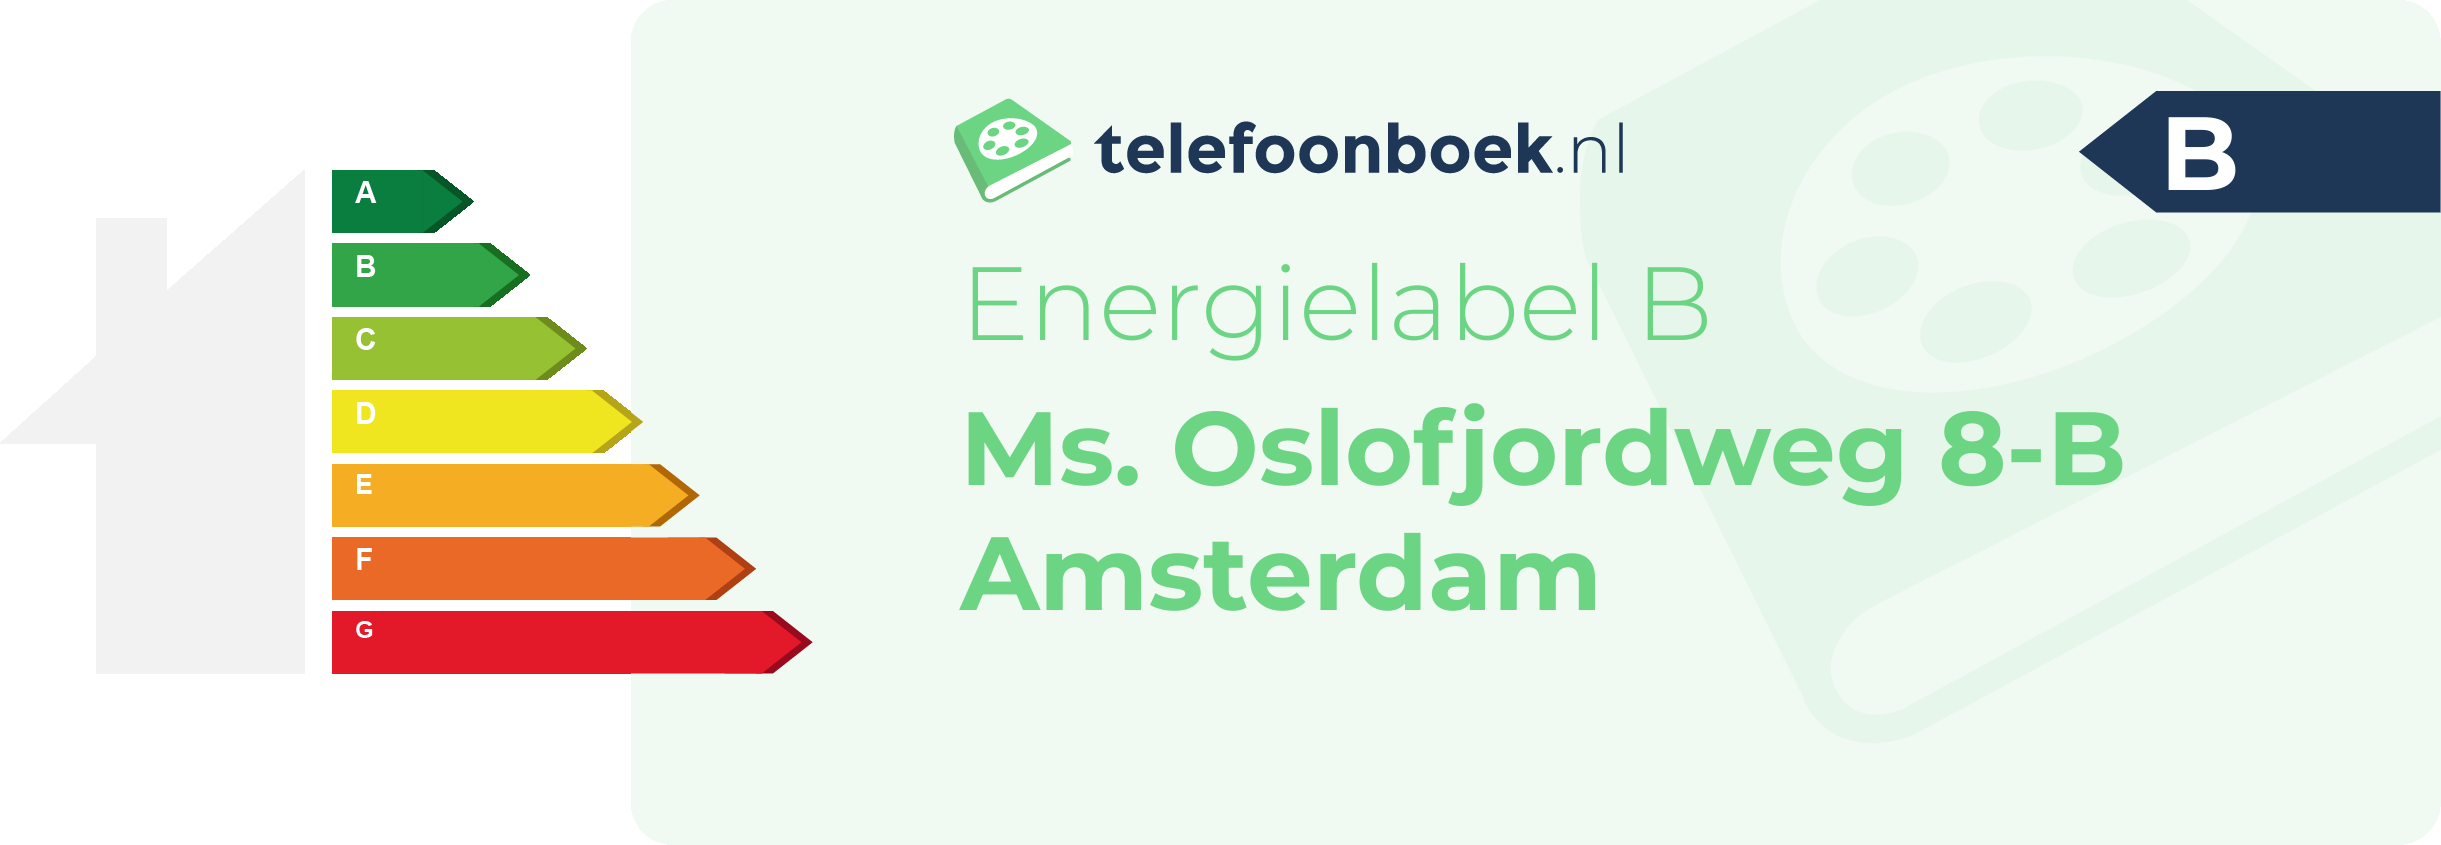 Energielabel Ms. Oslofjordweg 8-B Amsterdam